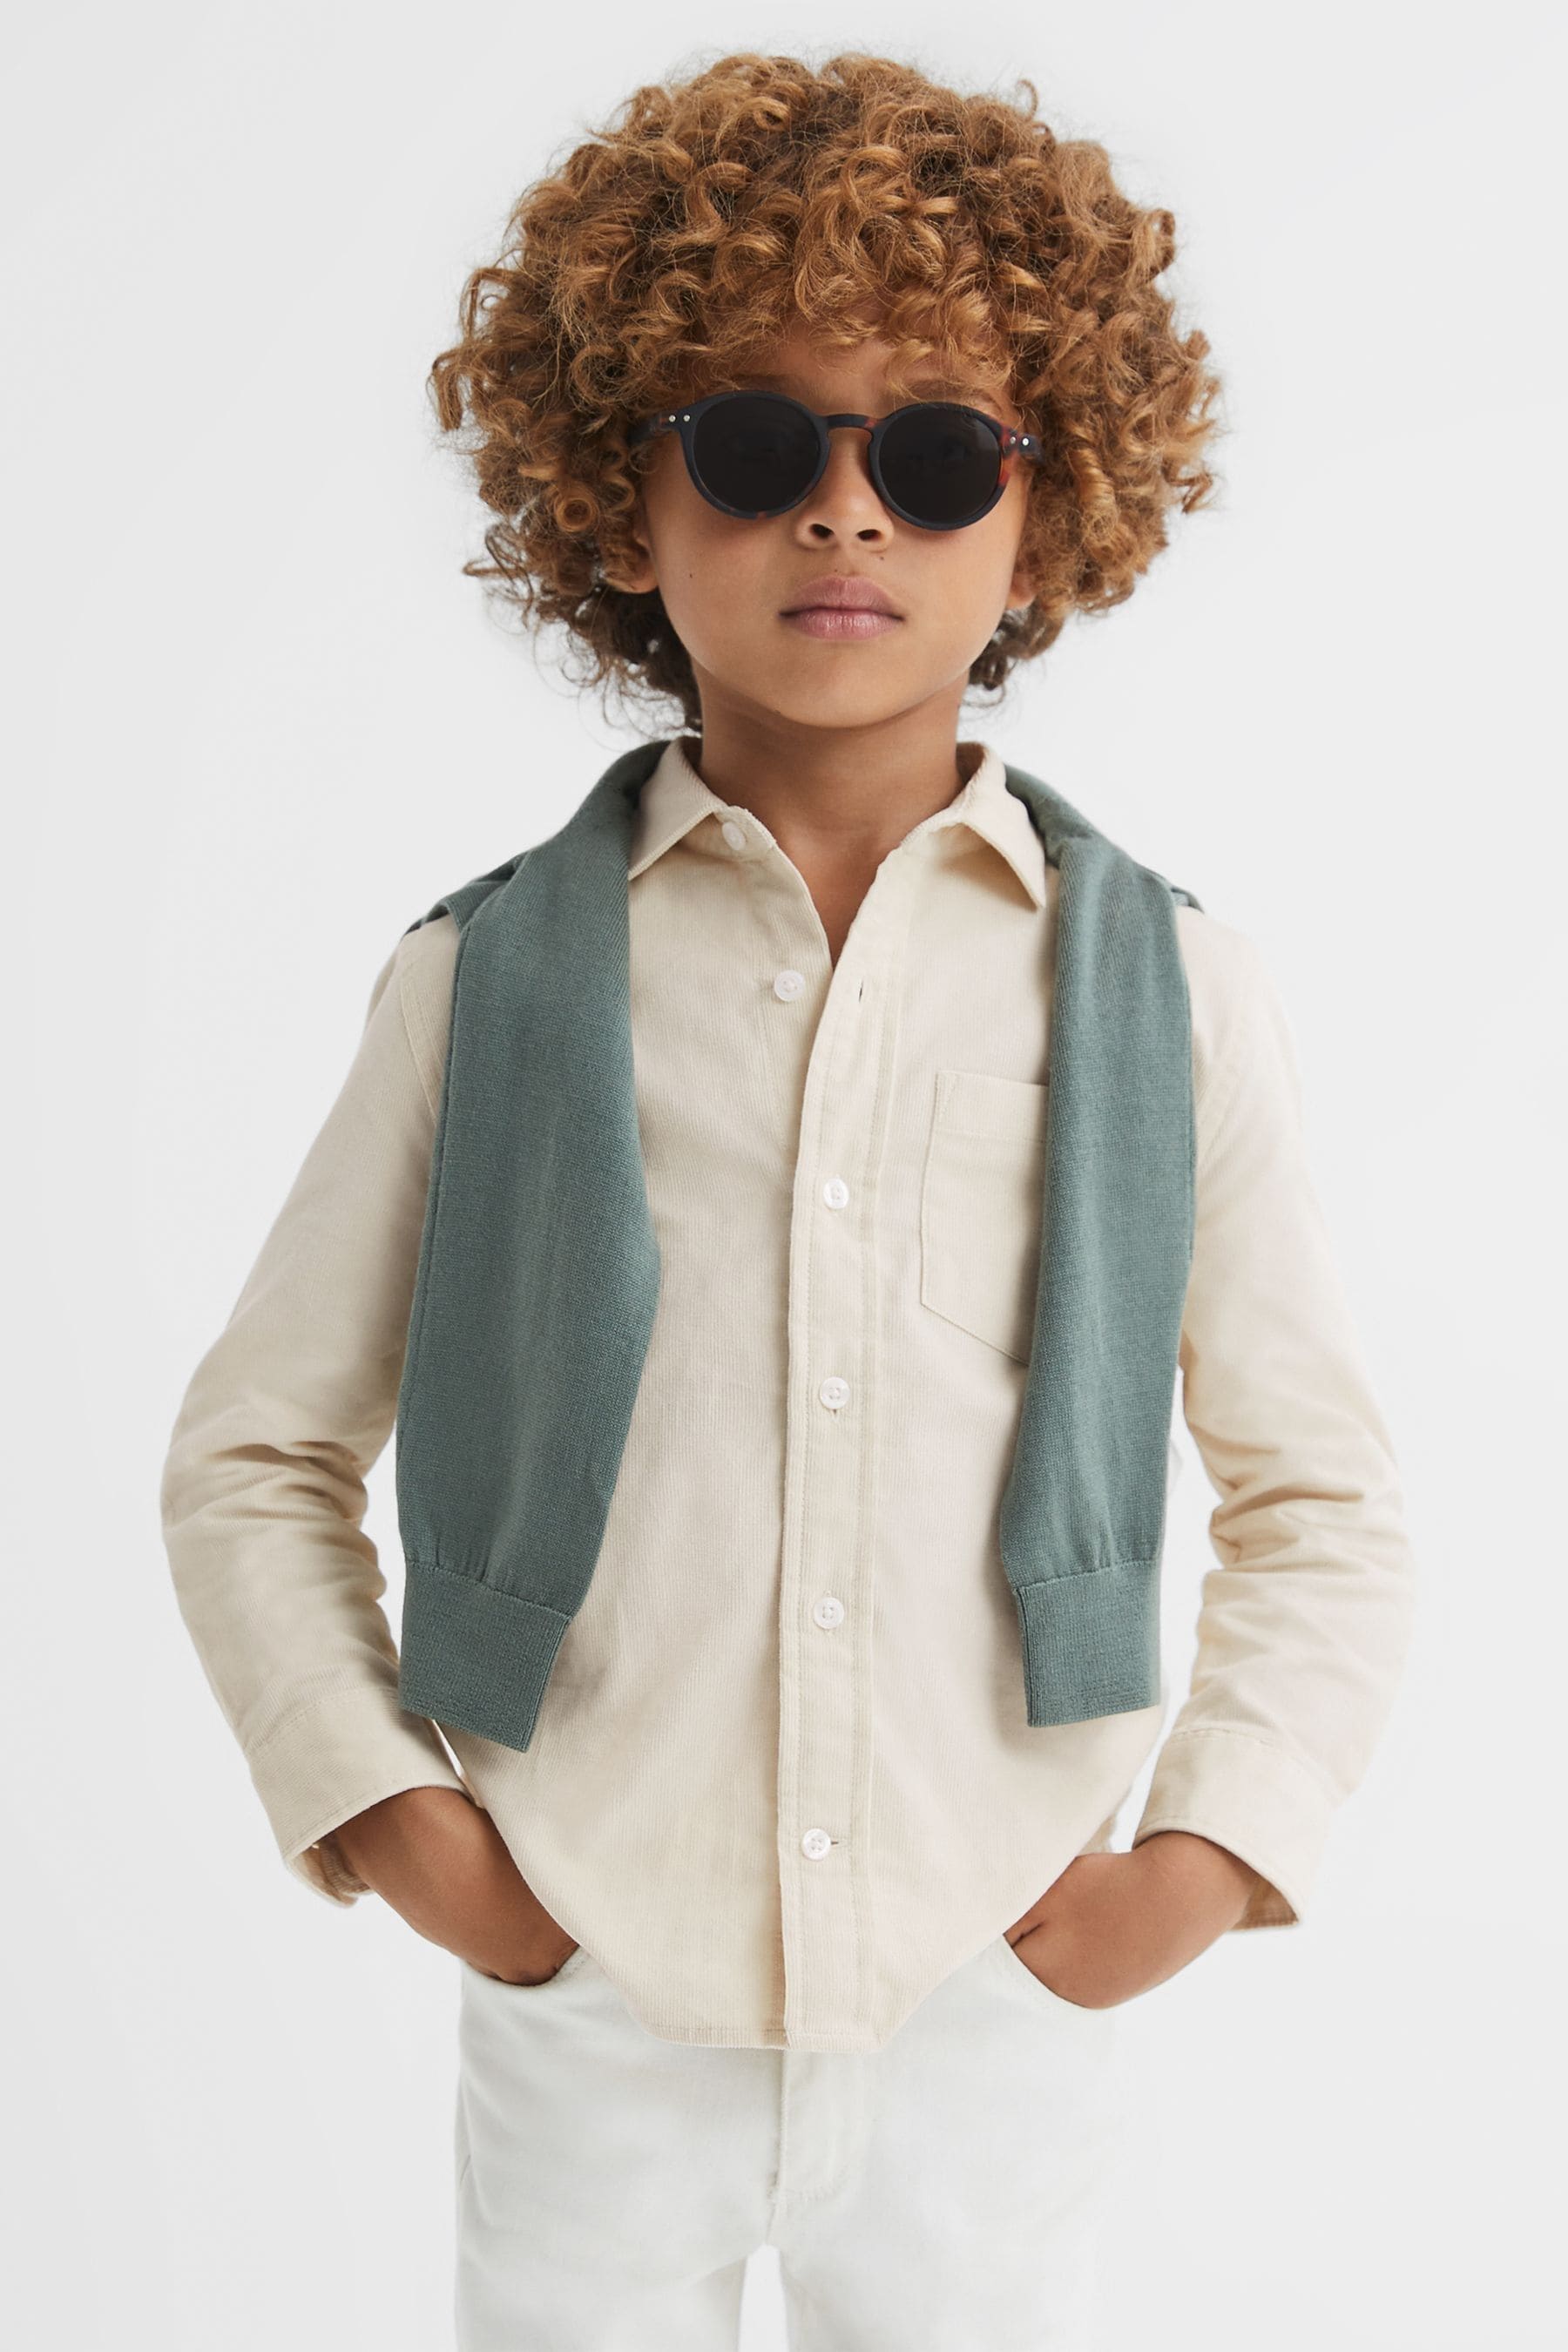 Reiss Kids' Albion - White Junior Corduroy Cutaway Collar Shirt, Uk 7-8 Yrs